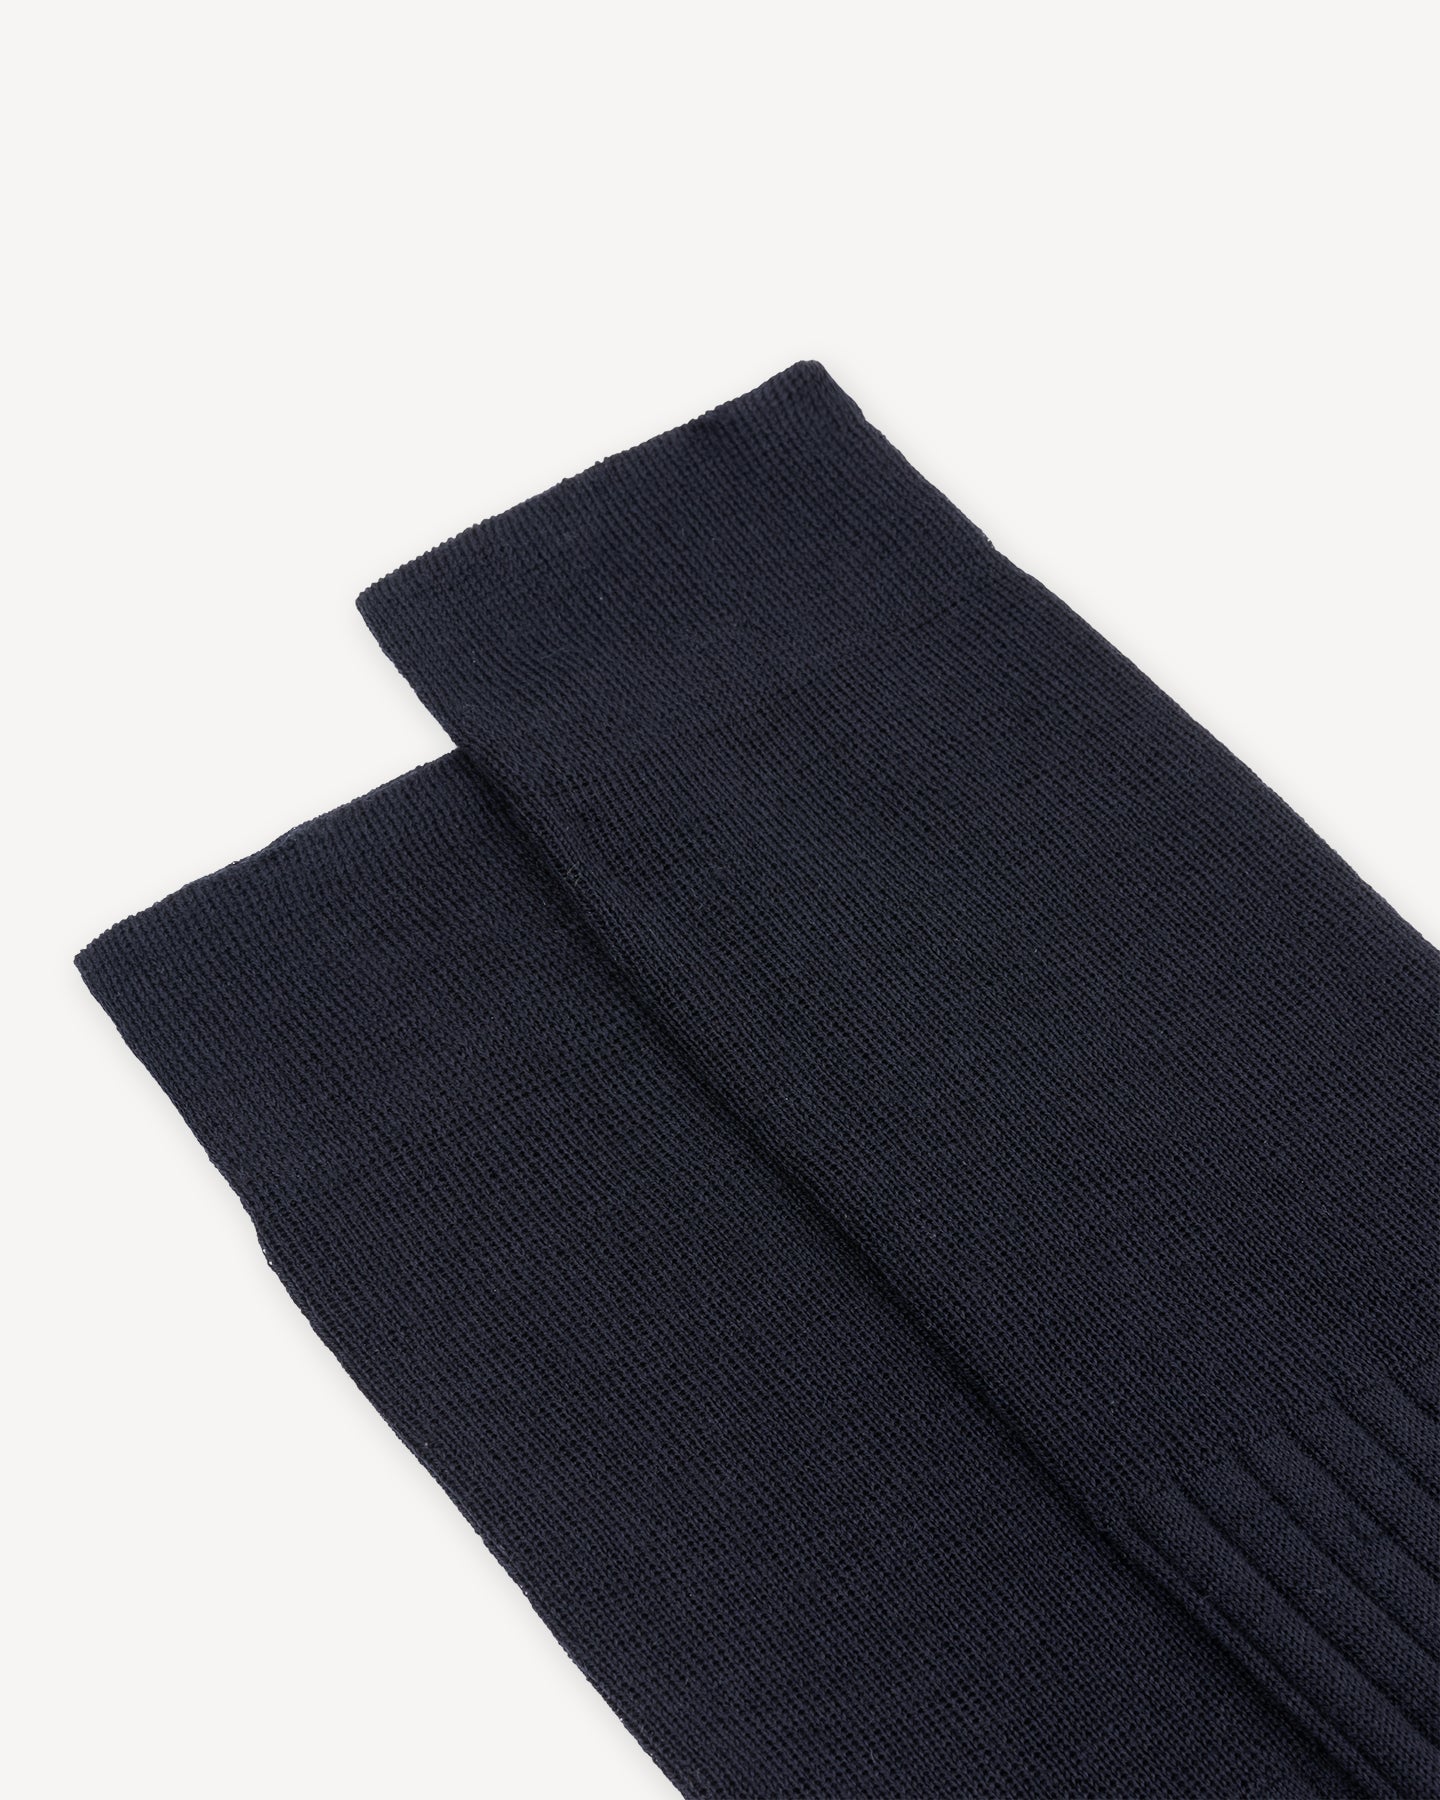 Navy knee high socks made from Australian merino wool